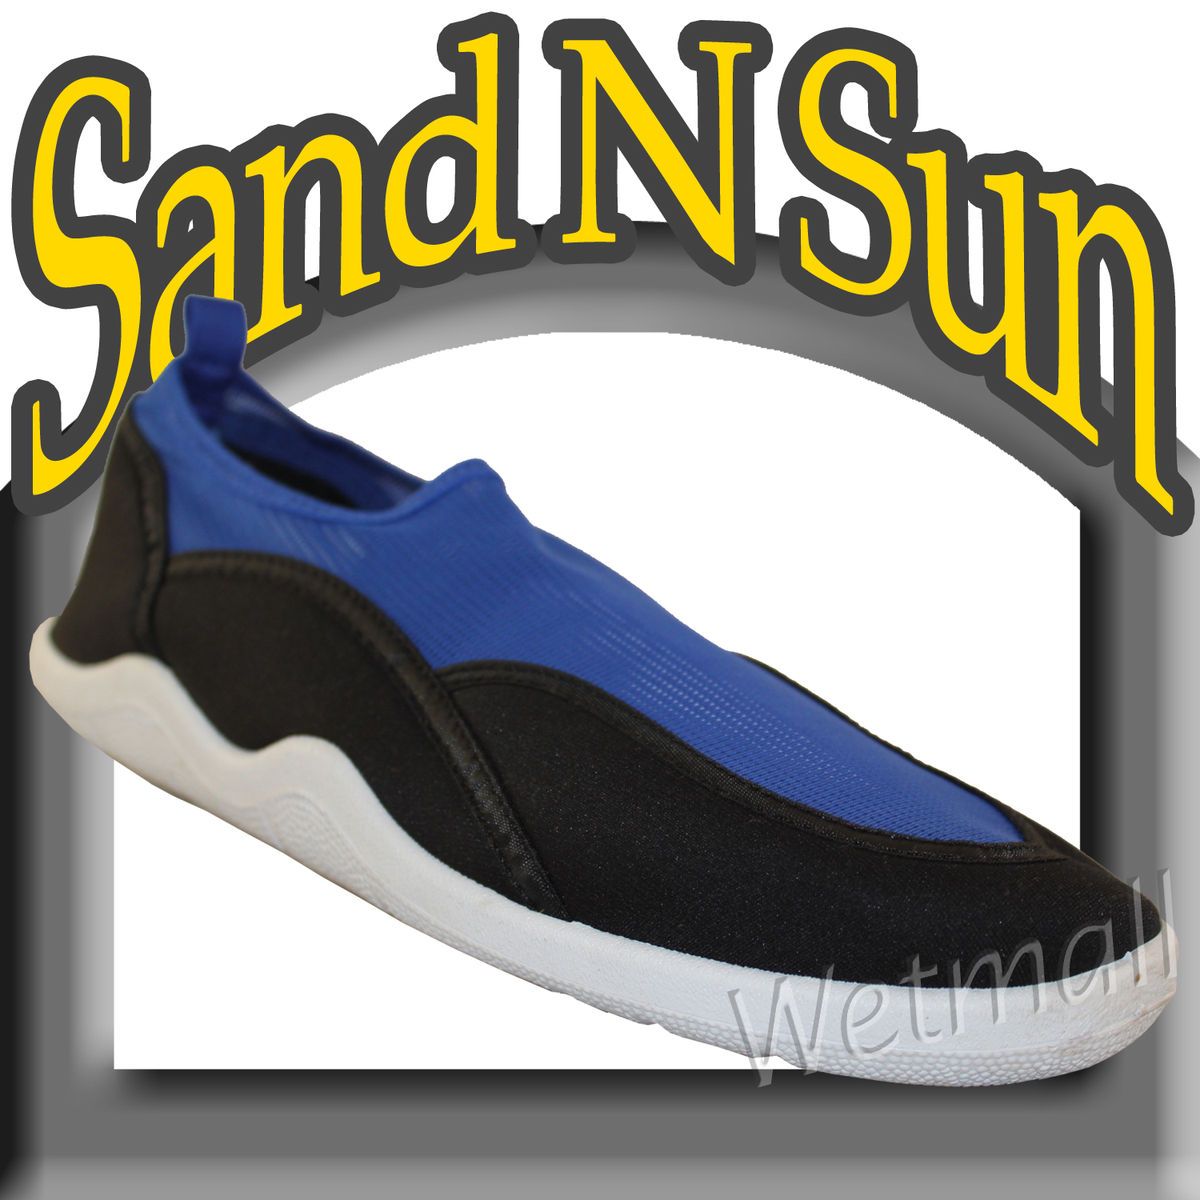 Mens Water Shoes Aqua Socks Sand N Sun Beach Boat Pool Shoes 20017 